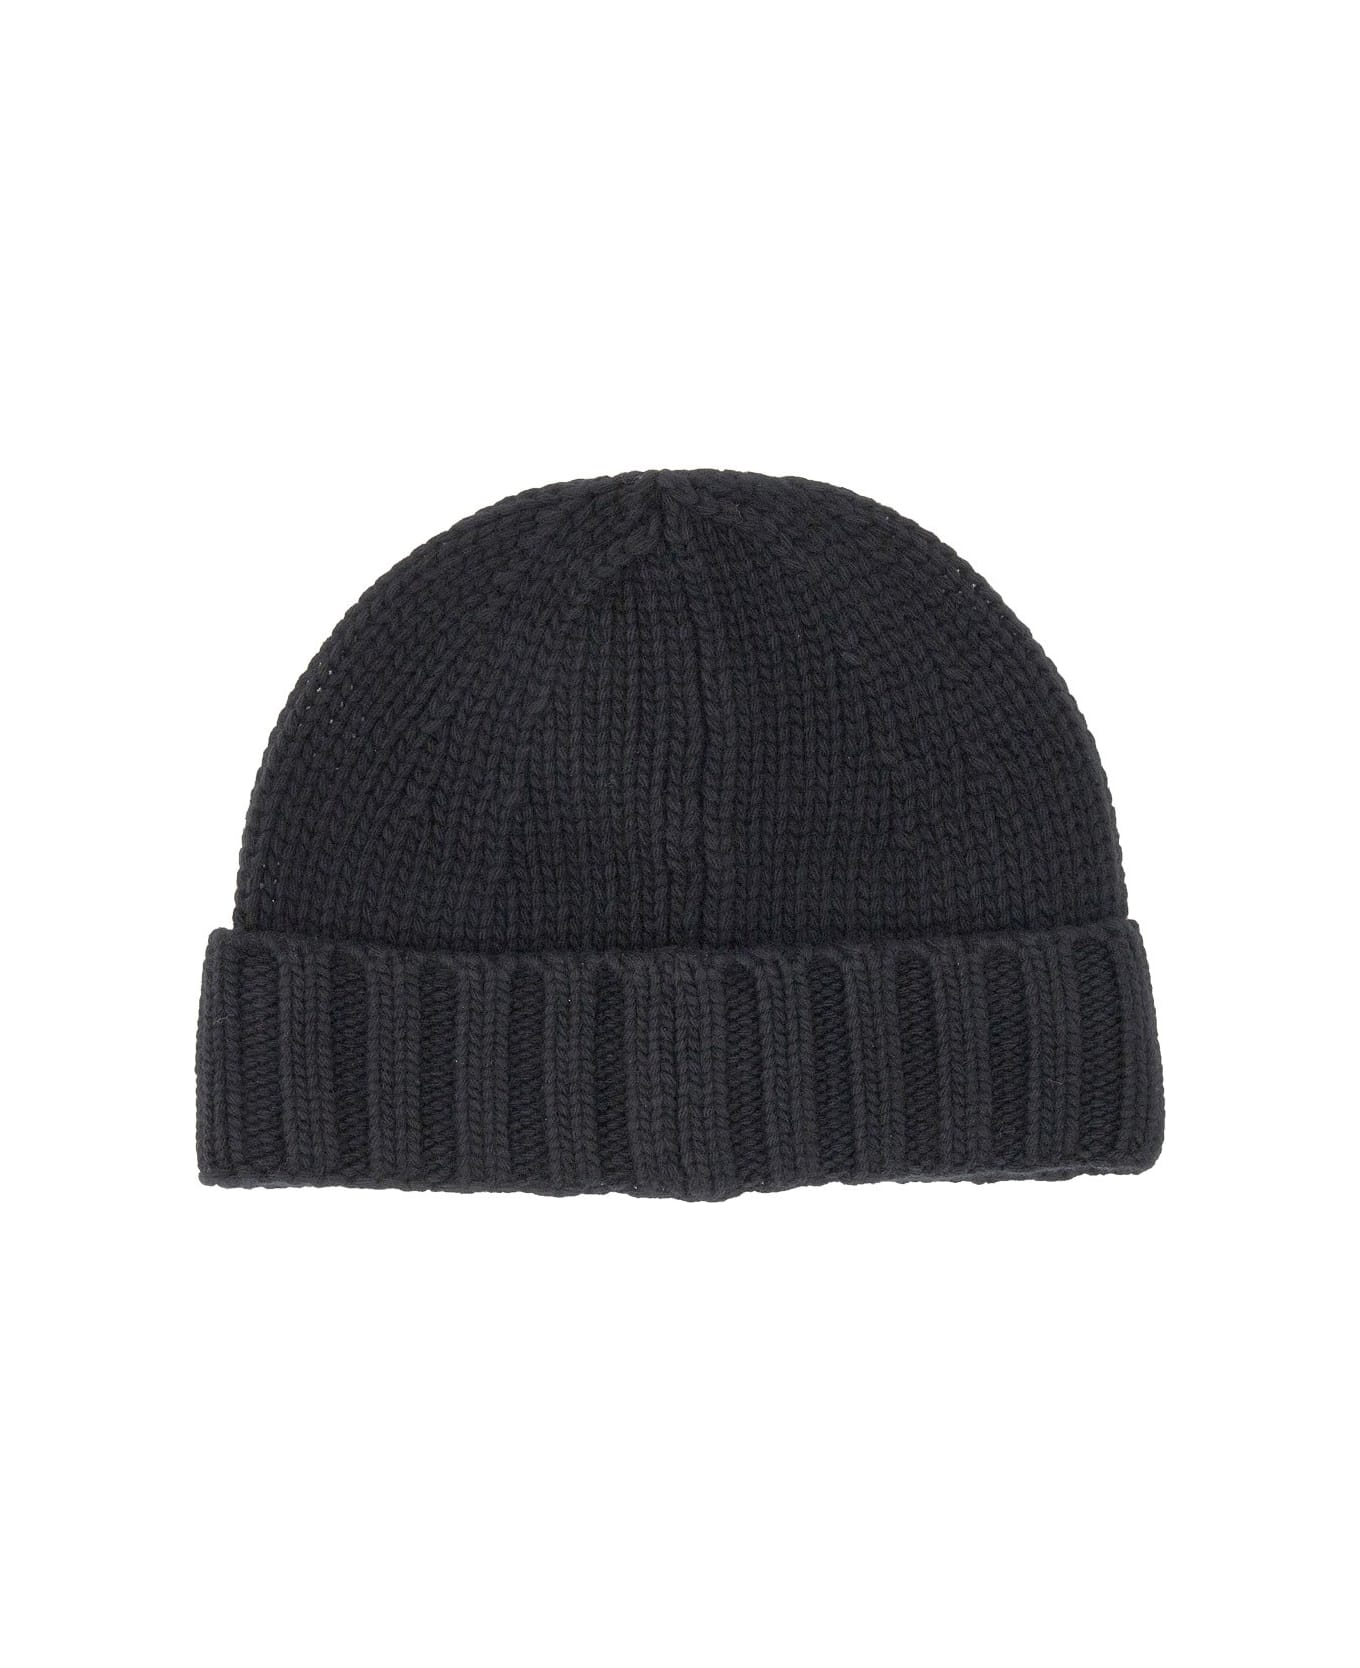 Stone Island Knitted Virgin Wool Hat - black